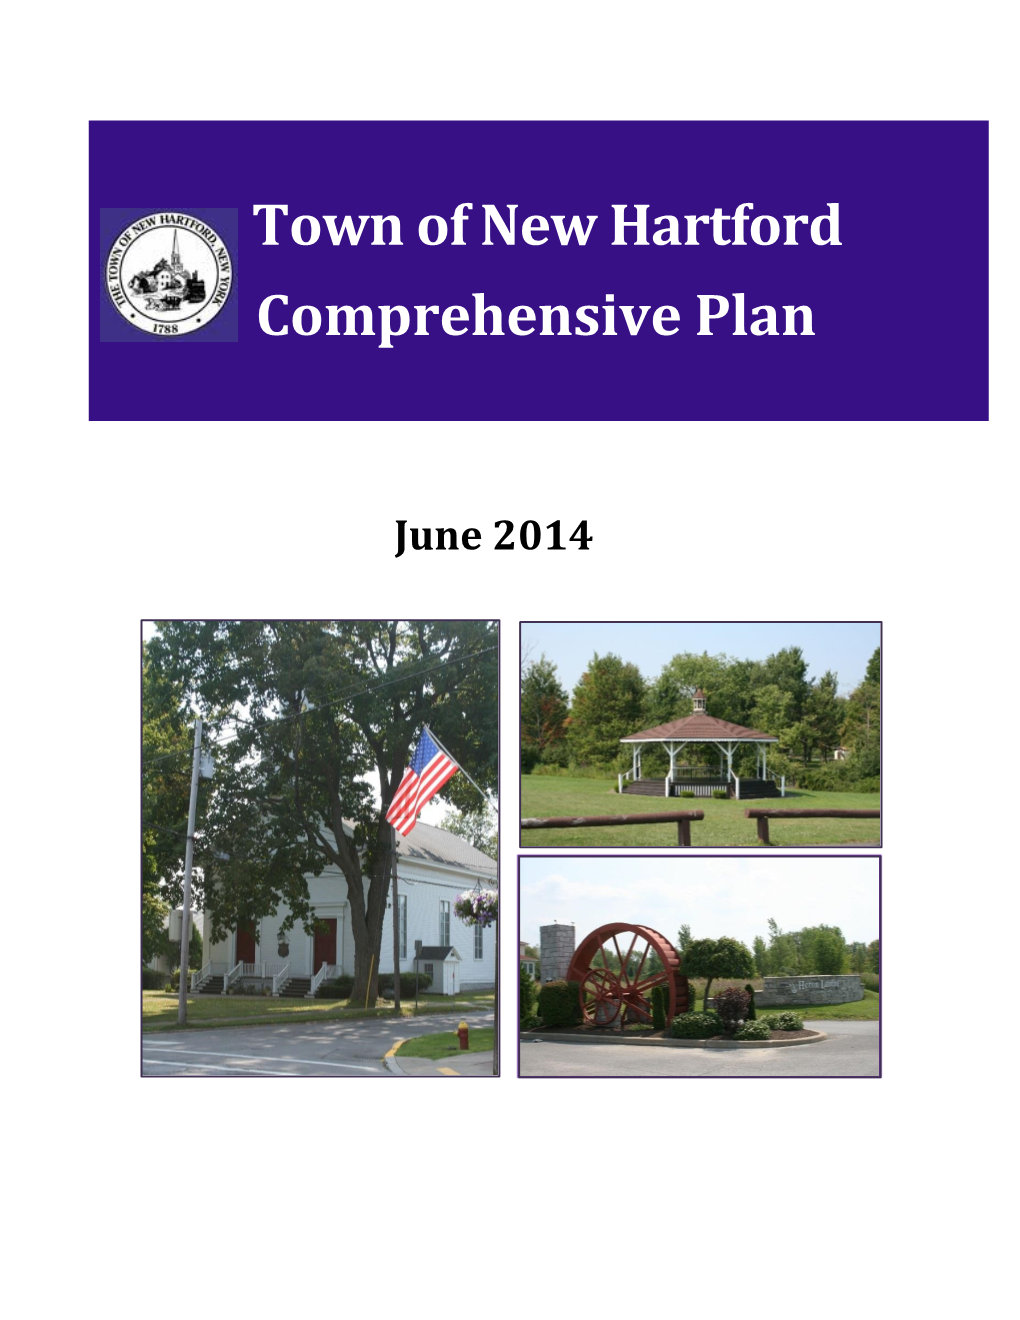 Town of New Hartford Comprehensive Plan